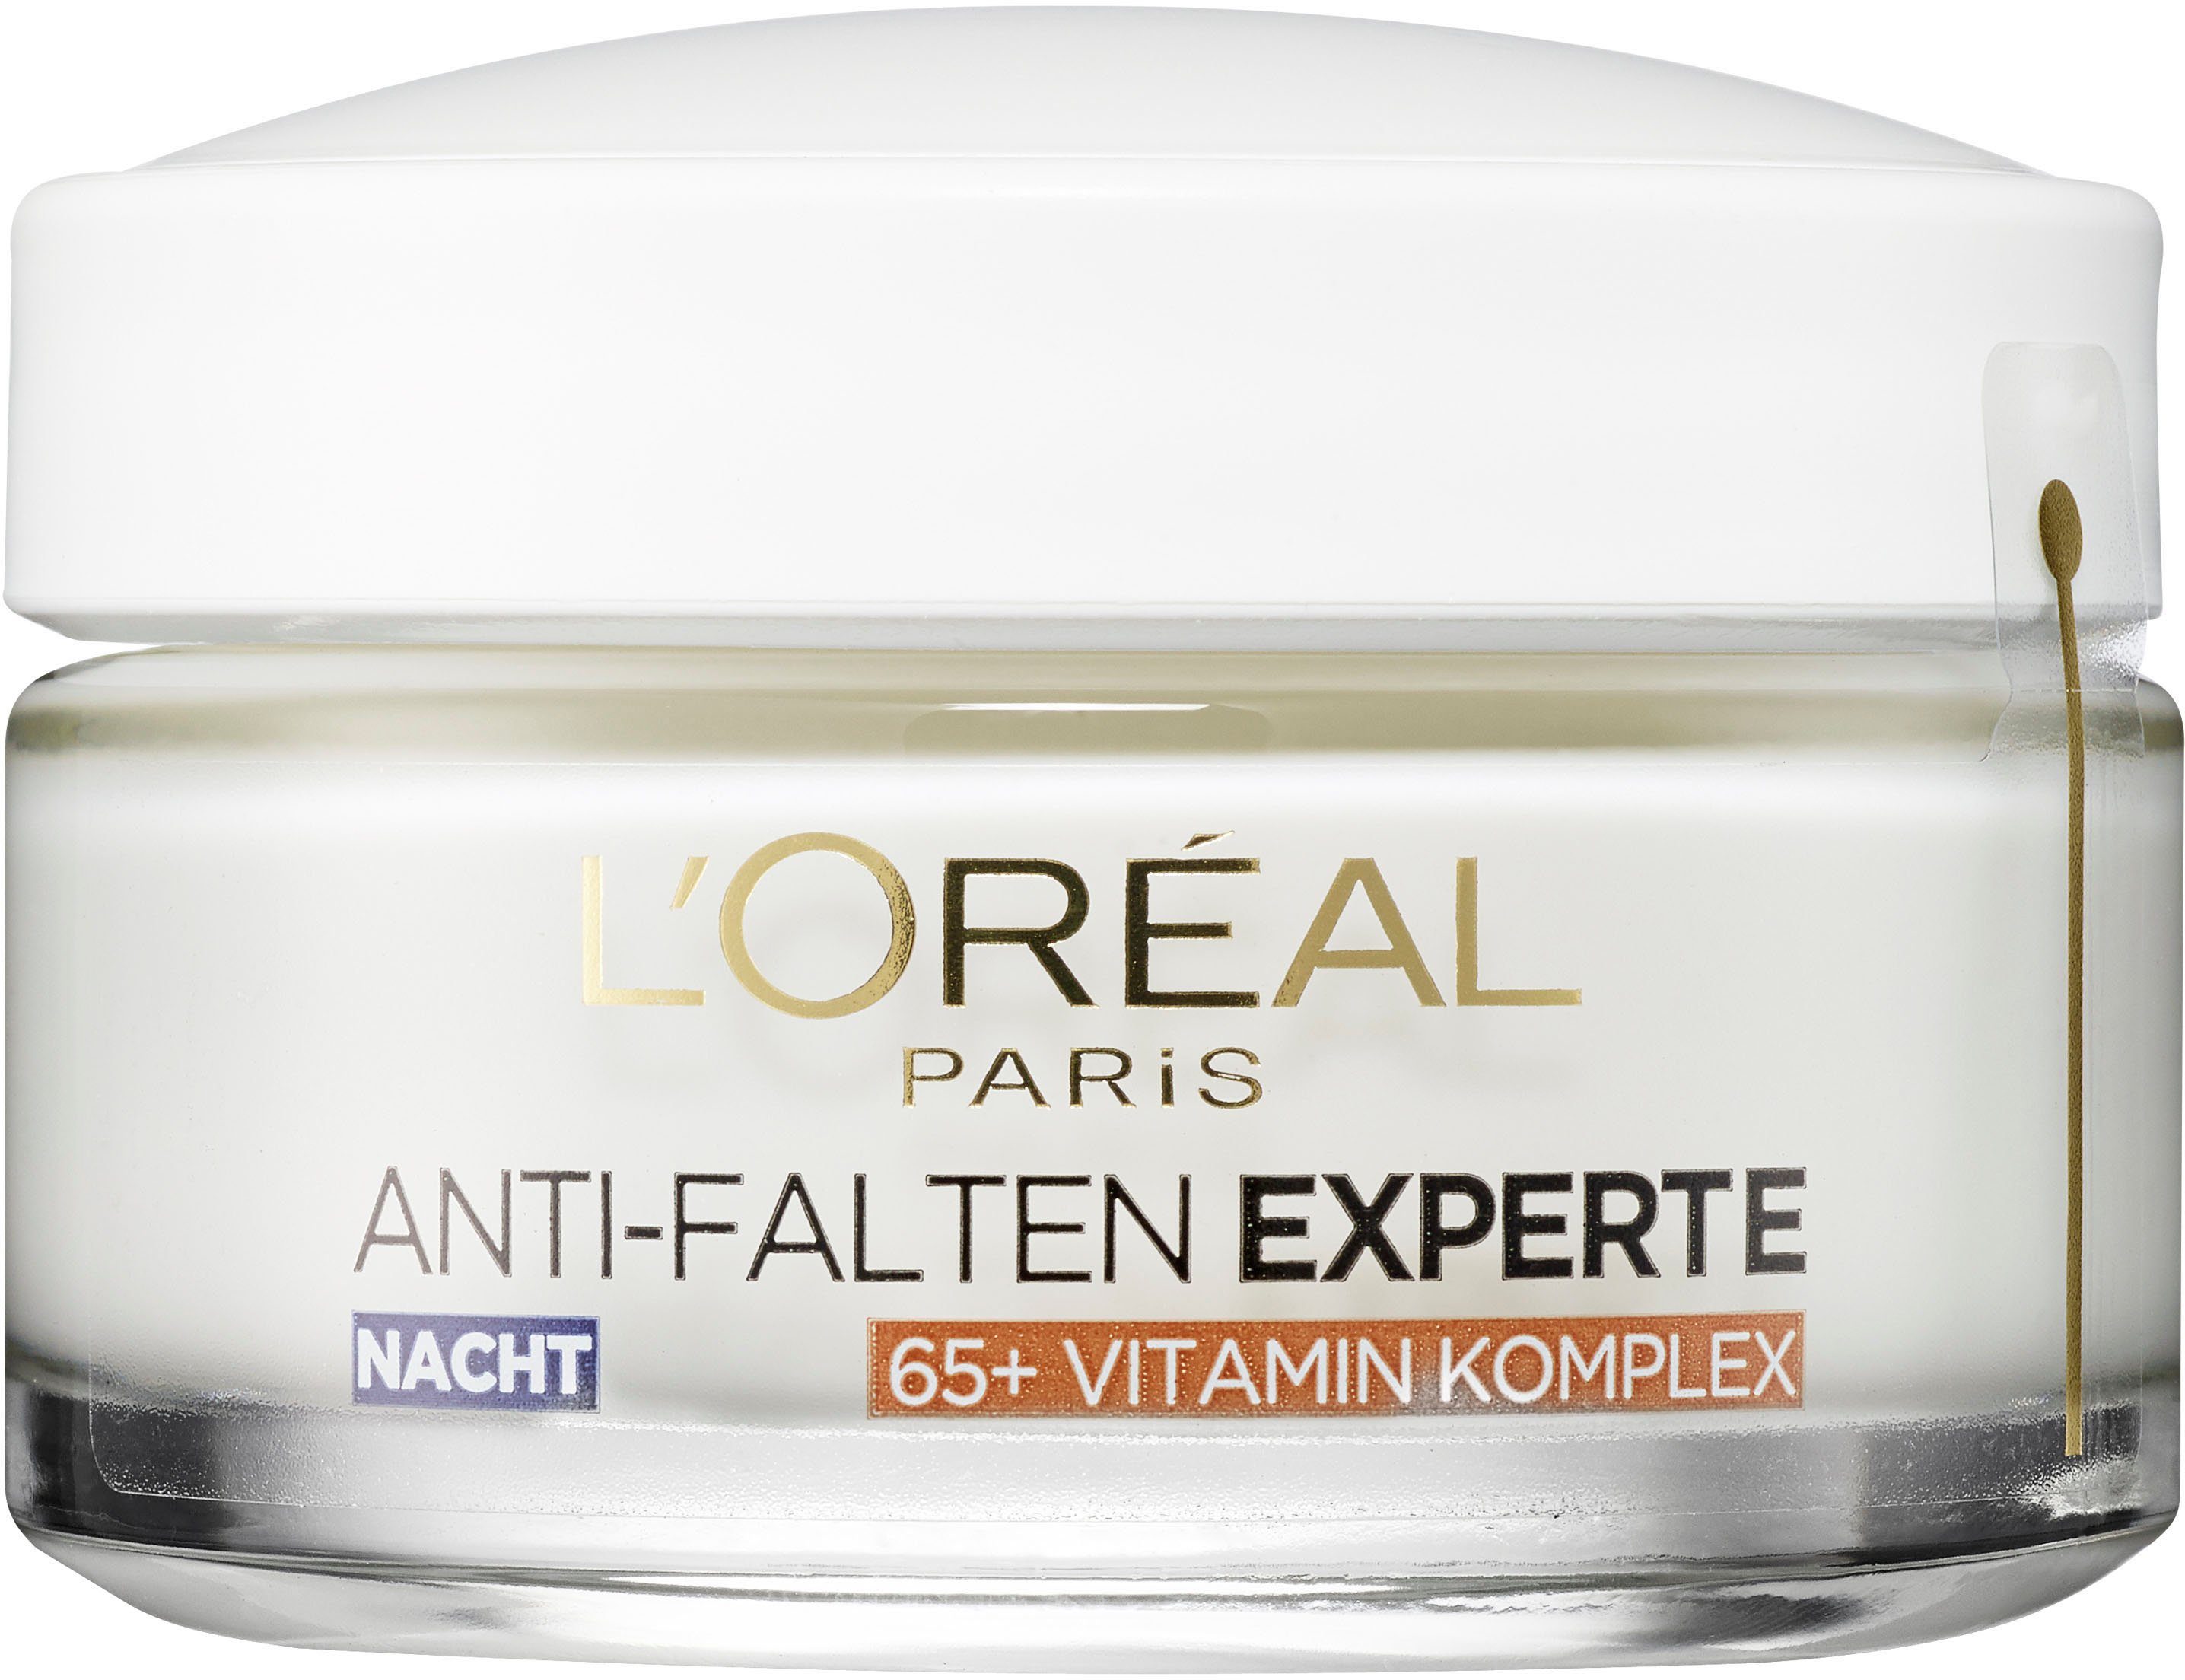 L'ORÉAL PARIS Anti-Aging-Creme Anti-Falten Experte Feuchtigkeitspflege Nacht für Haut 65+